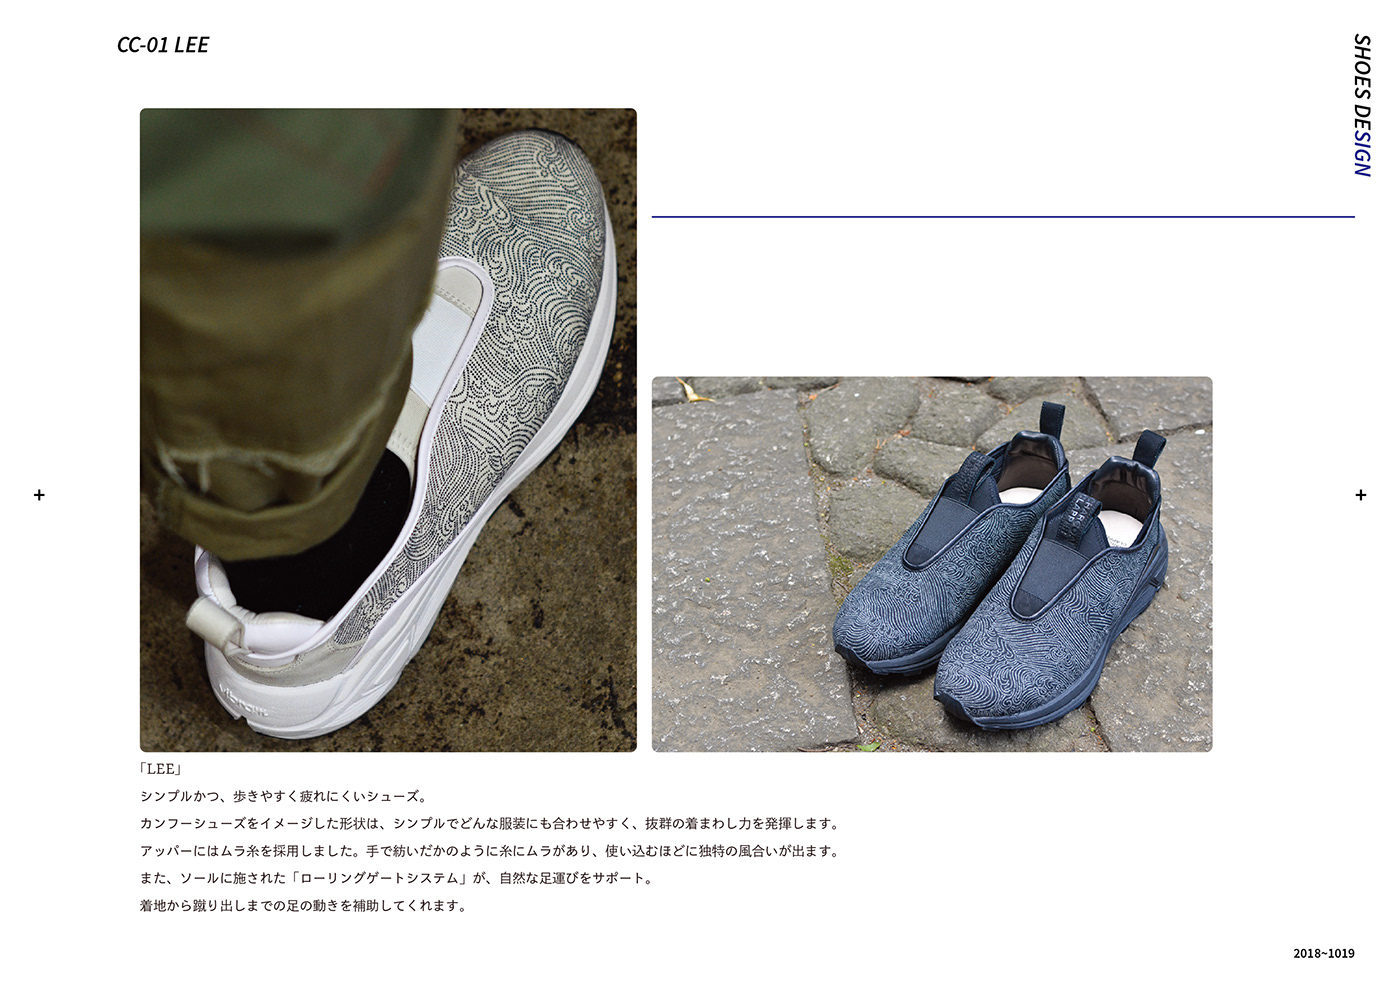 Fashion  footwear footweardesign seakerdesign shoes shoesdesign sneaker design vibram